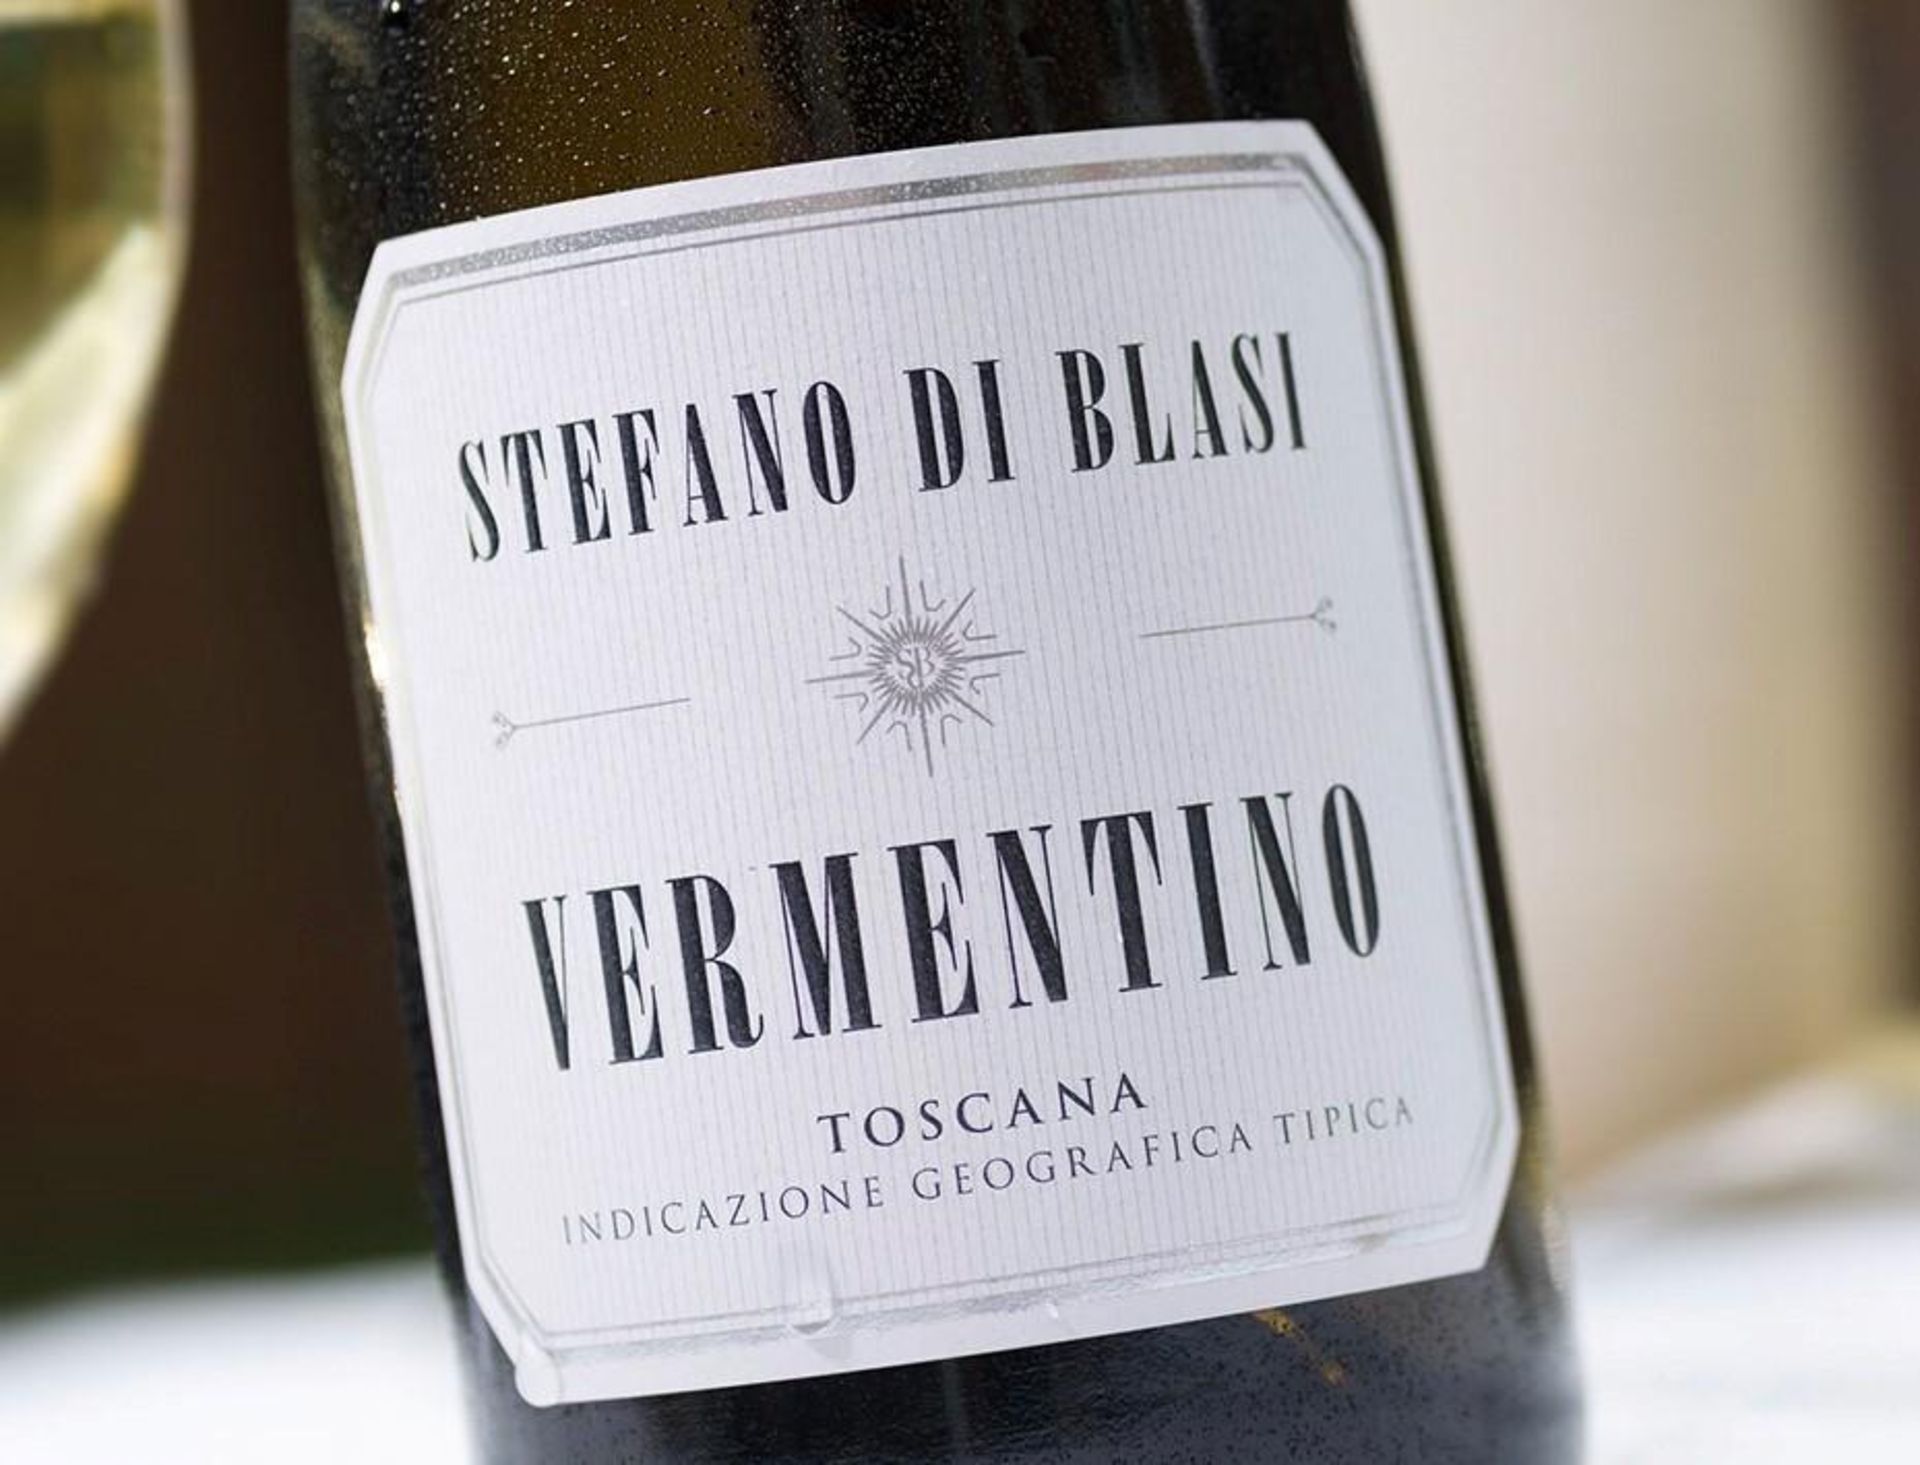 12 x Bottles of Stefano Di Blasi 2019 Vermentino Toscana 13.5% Wine - 750ml Bottles - Drink Until 20